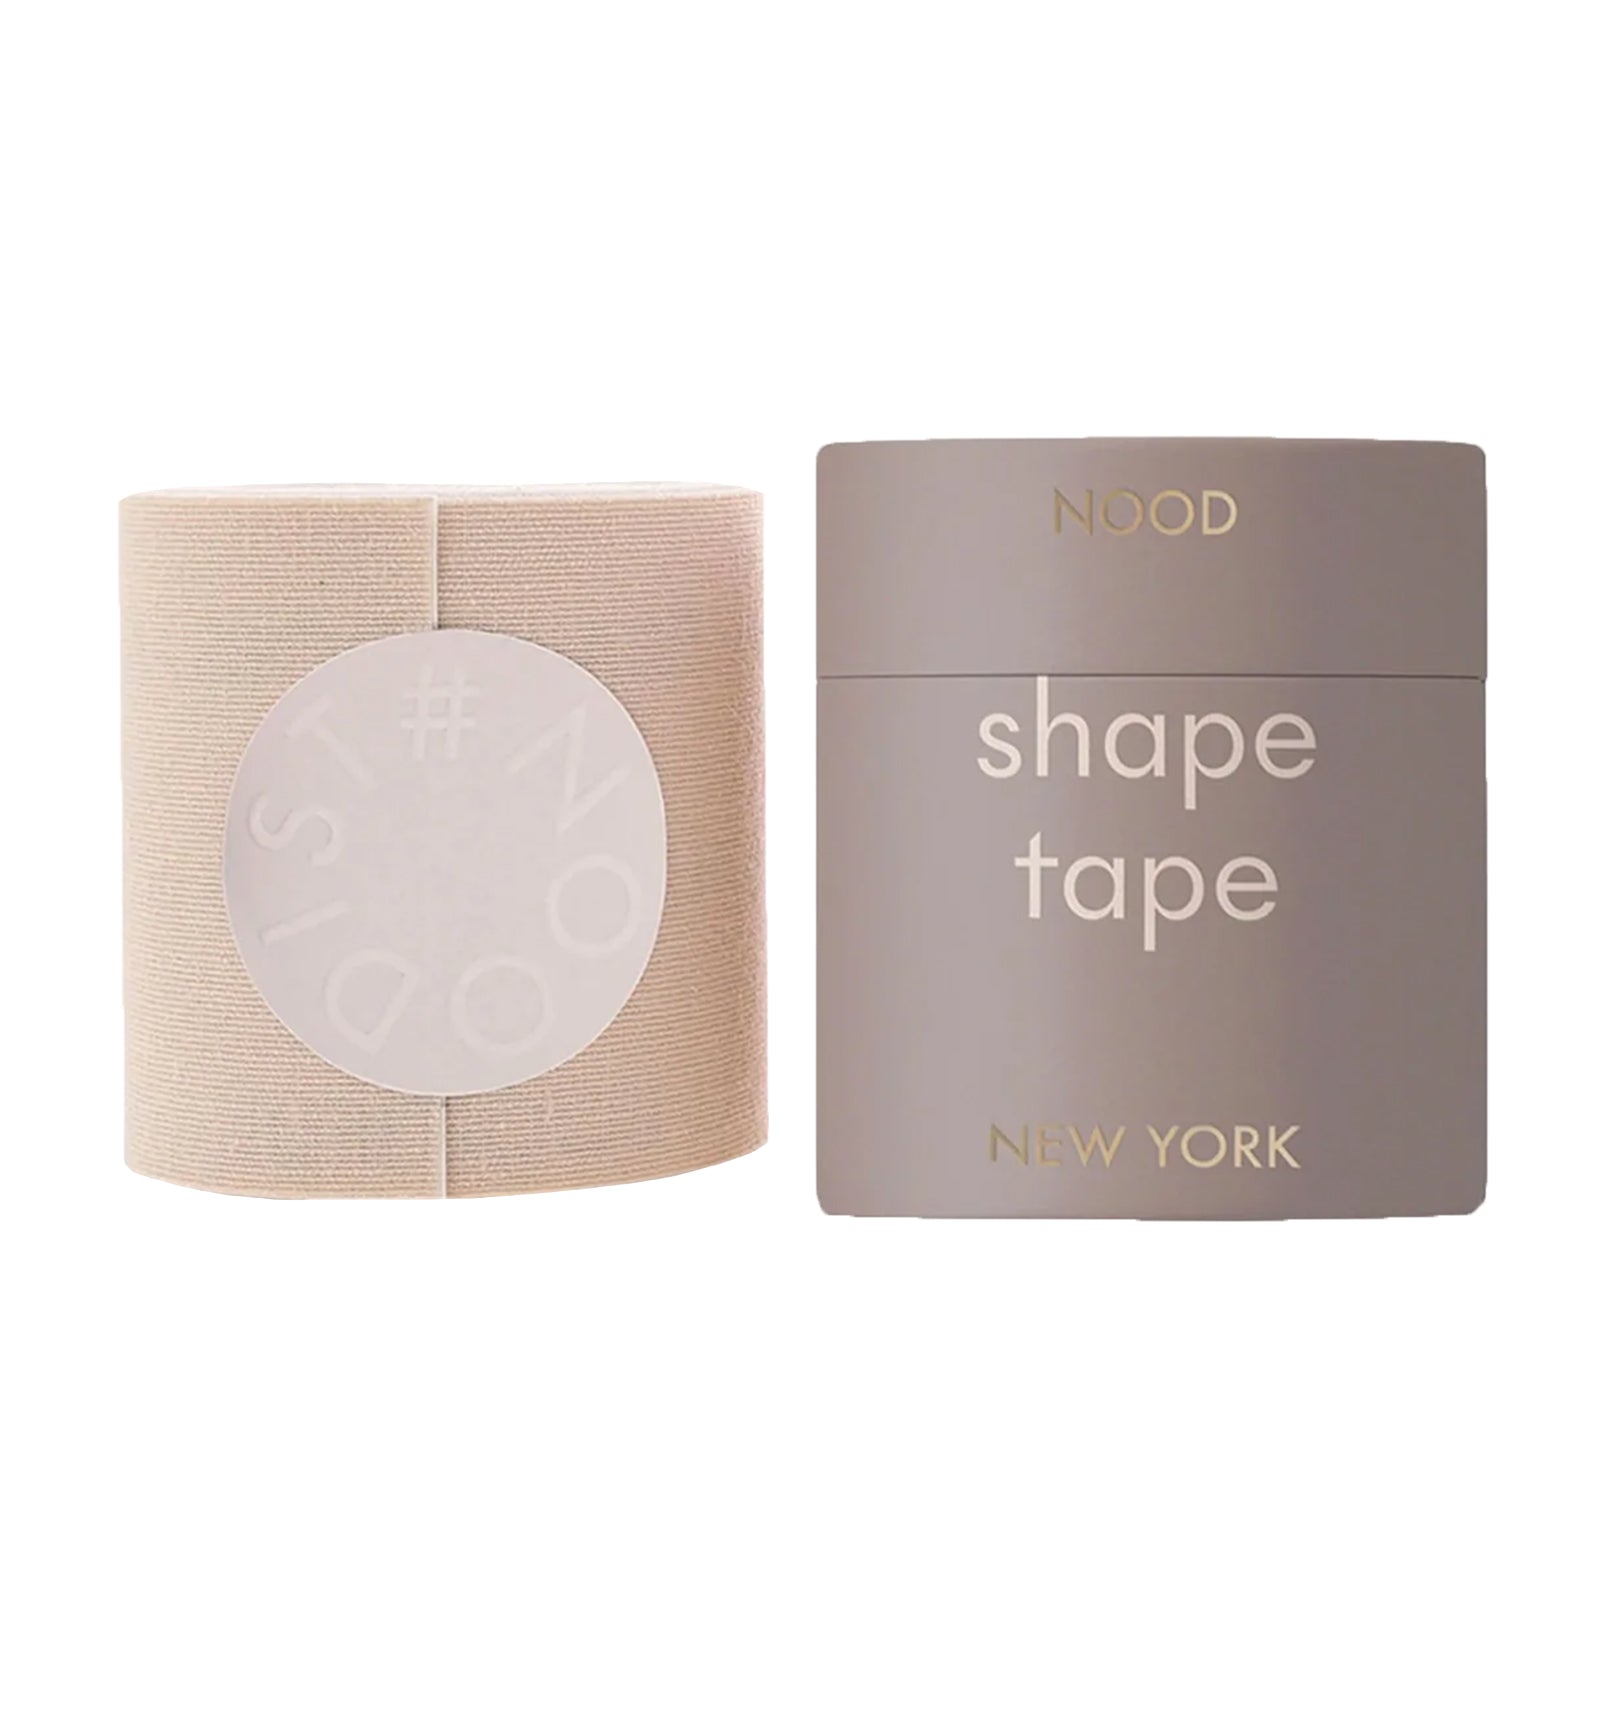 NOOD Shape Tape Breast Tape (16 ft Roll), Nood 3 - Nood 3,1 Roll